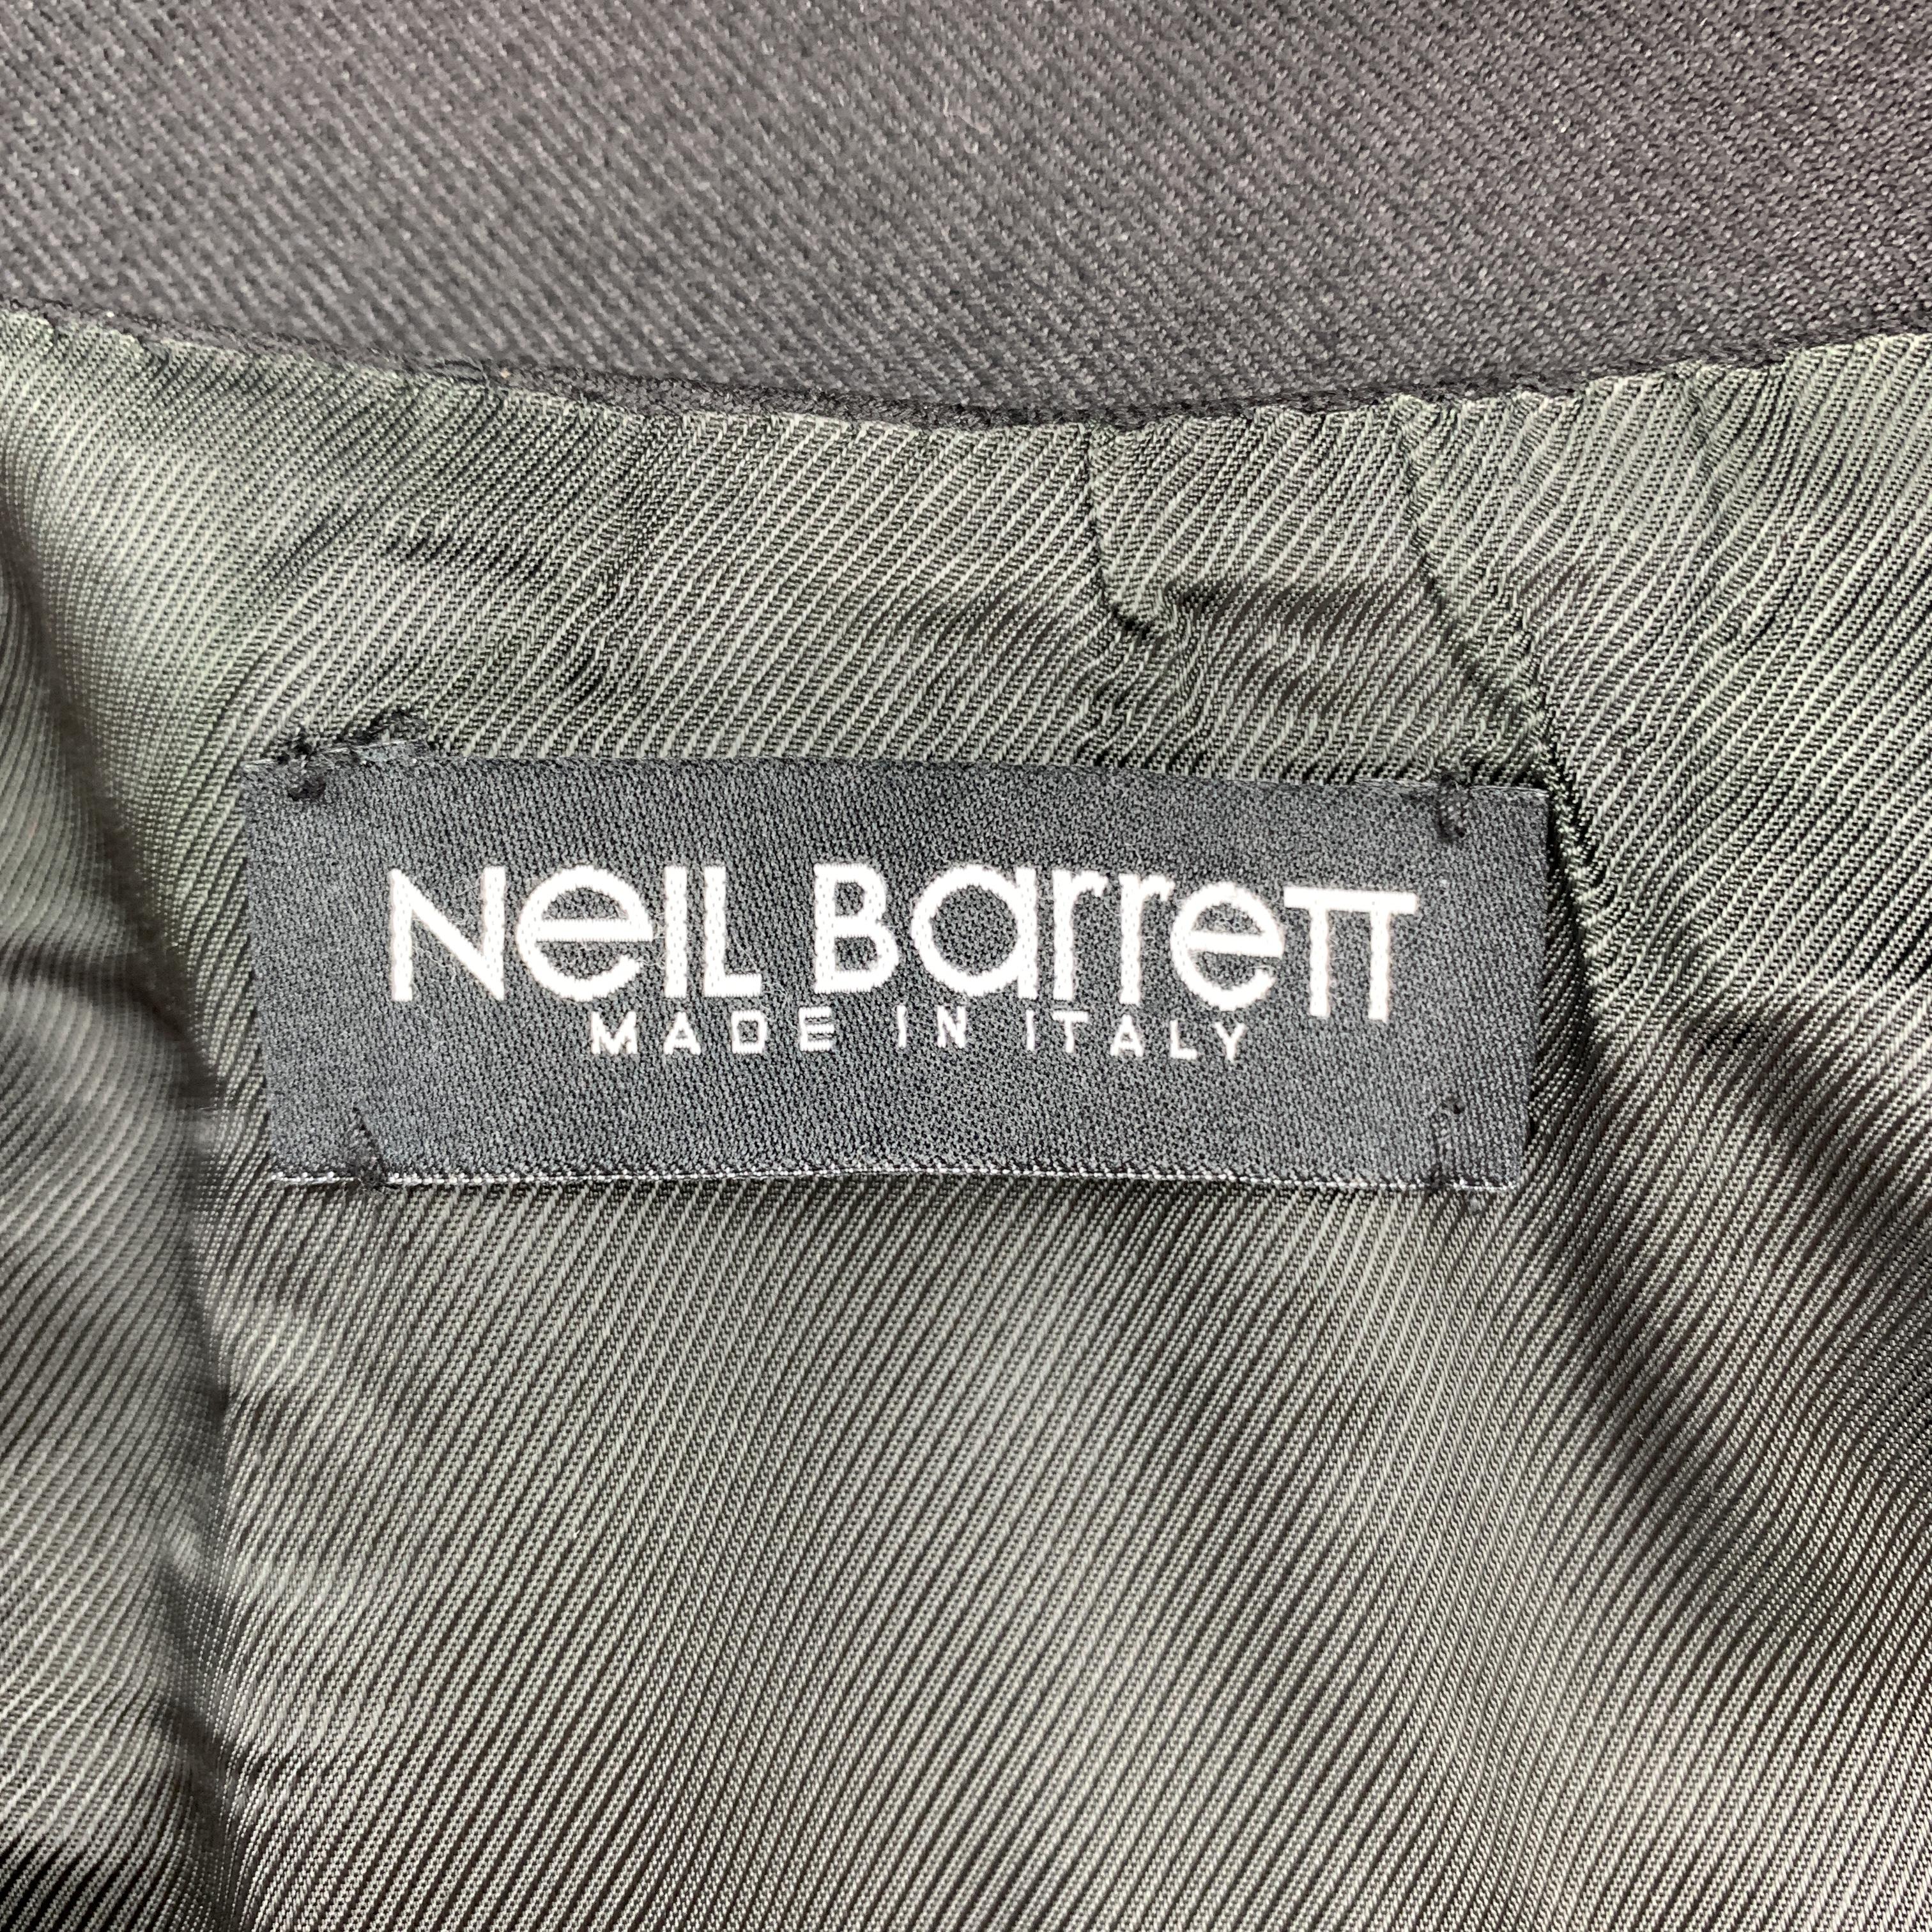 NEIL BARRETT Size 38 Black Wool Cutout Harness Back Vest 2